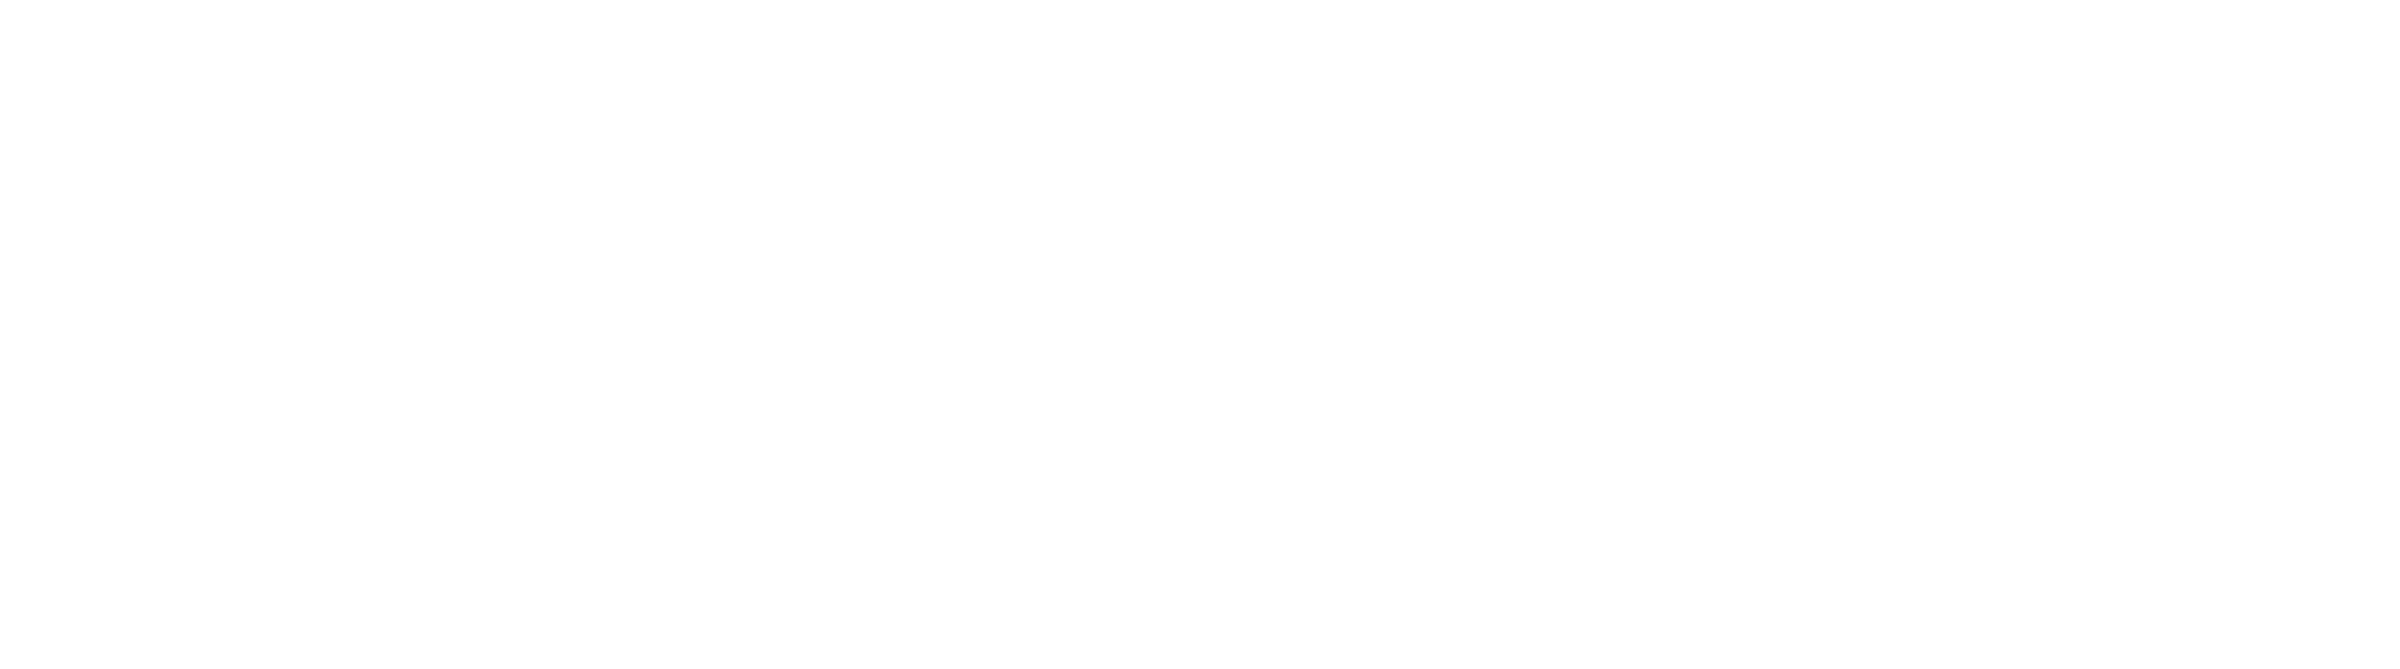 The Texas Child Health Access Through Telemedicine (TCHATT) Logo